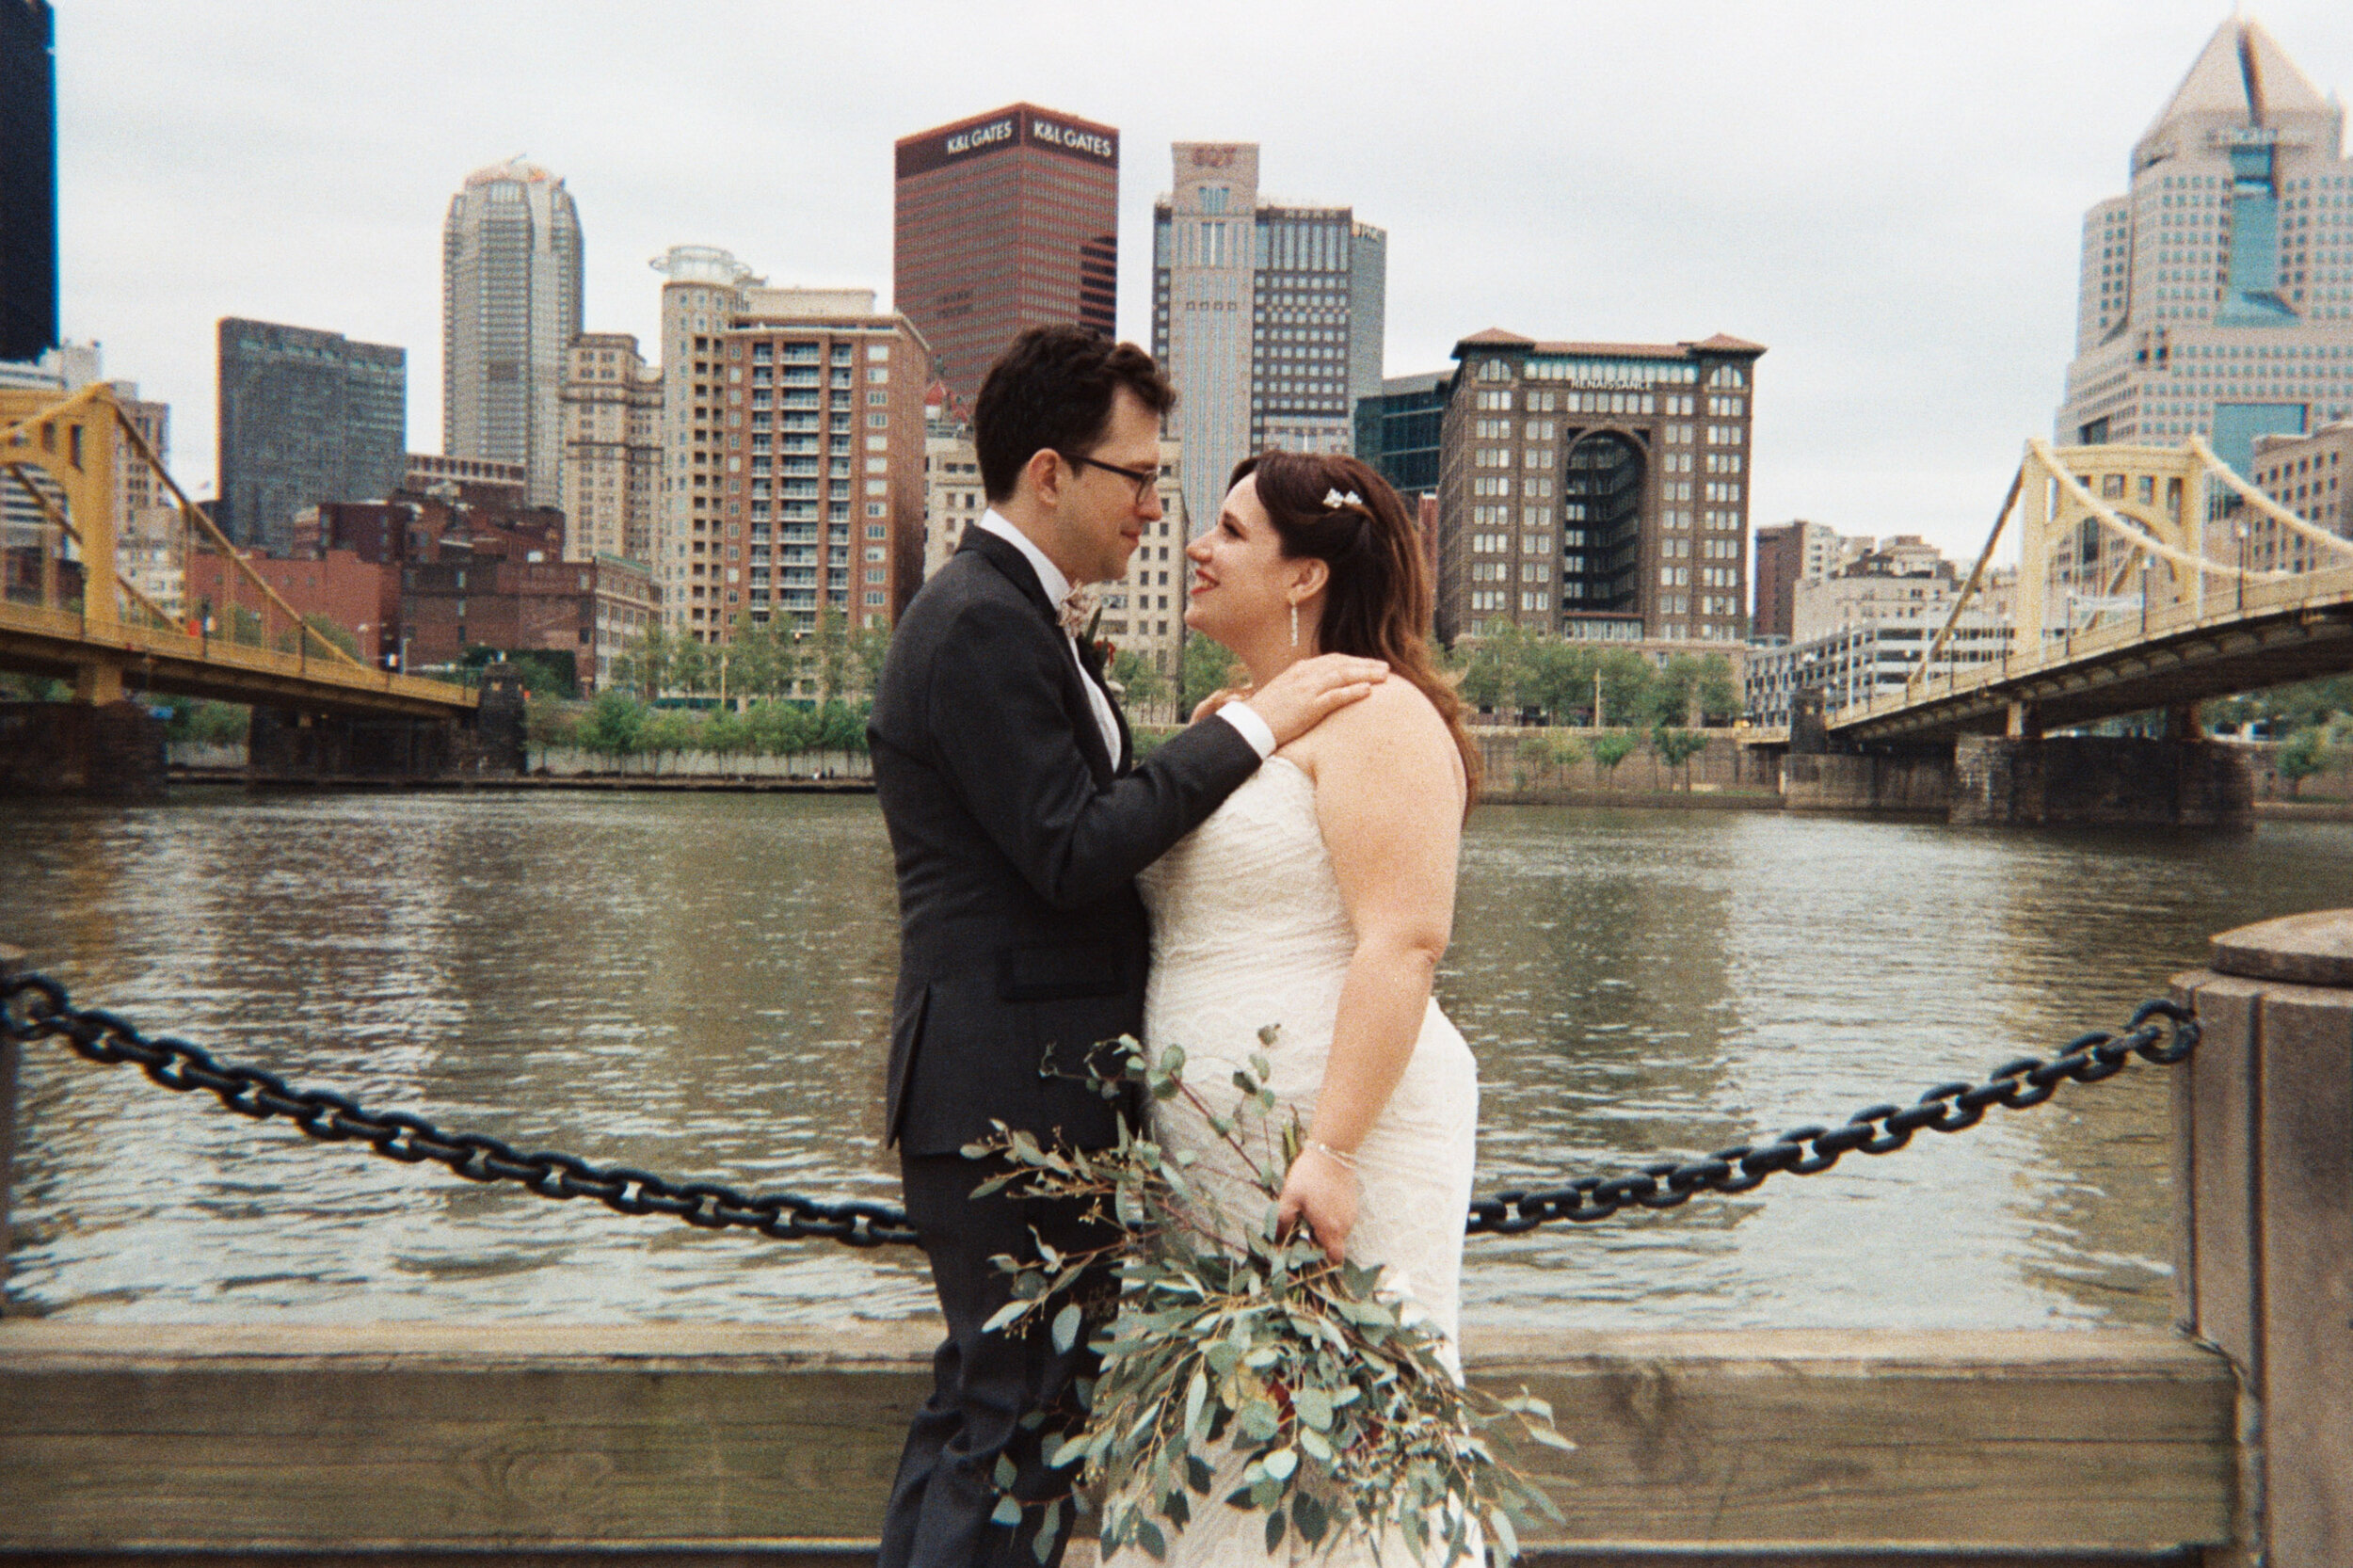 Pittsburgh NYC Film Wedding Photographer - Rat Lab - Lawrenceville - Stephanie Dave125.jpg